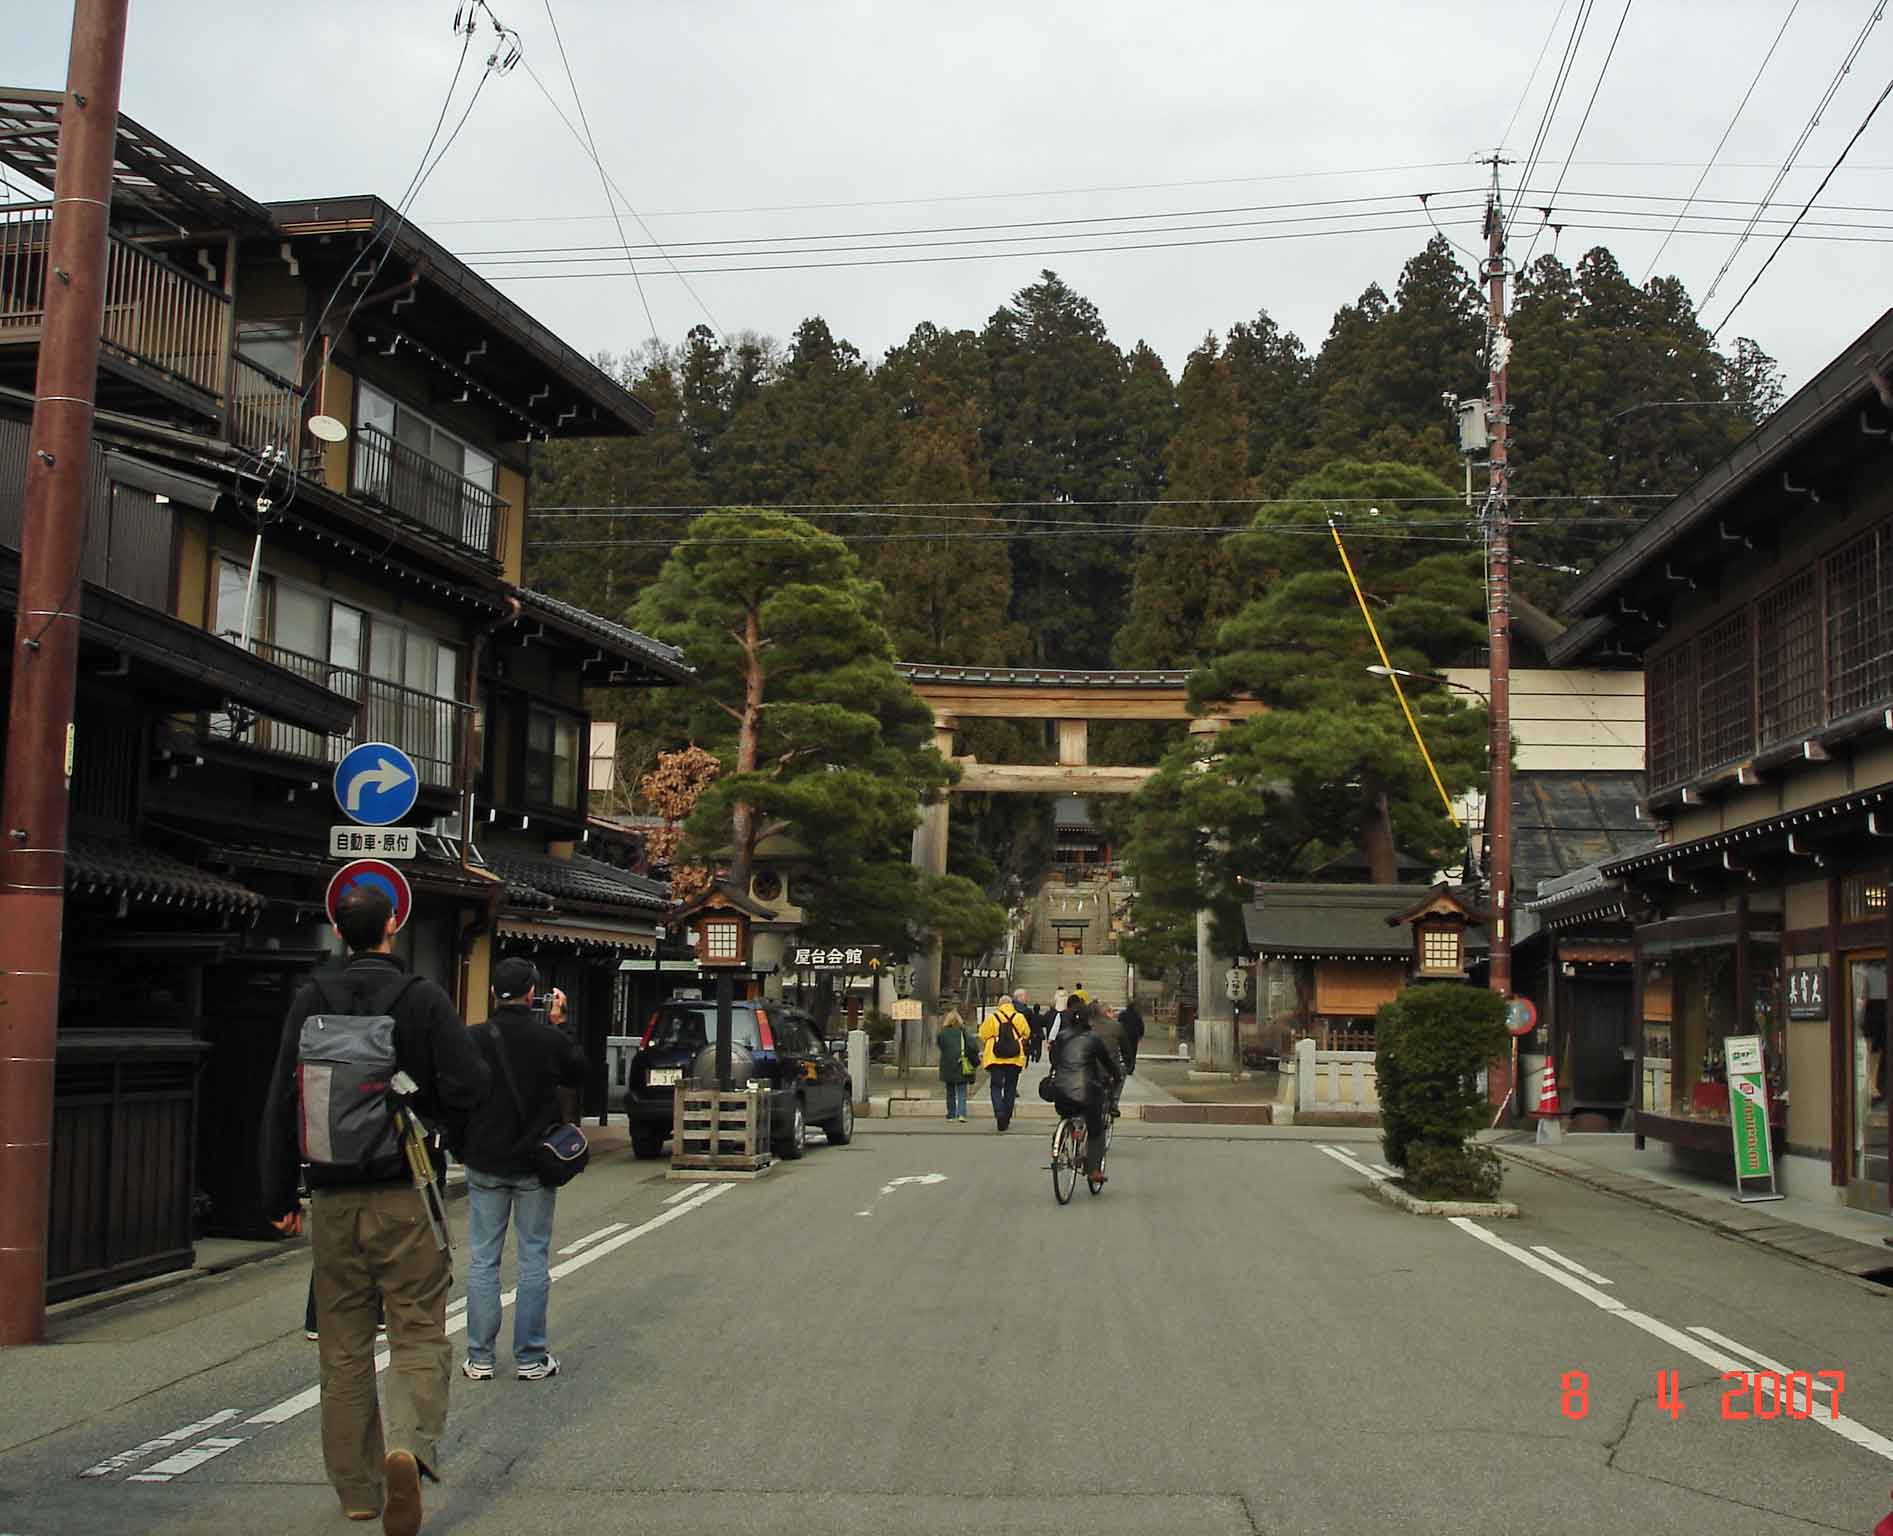 Torii Gate to Sakurayama Hachiman Shrine, Takayama,Gifu Province.Japan